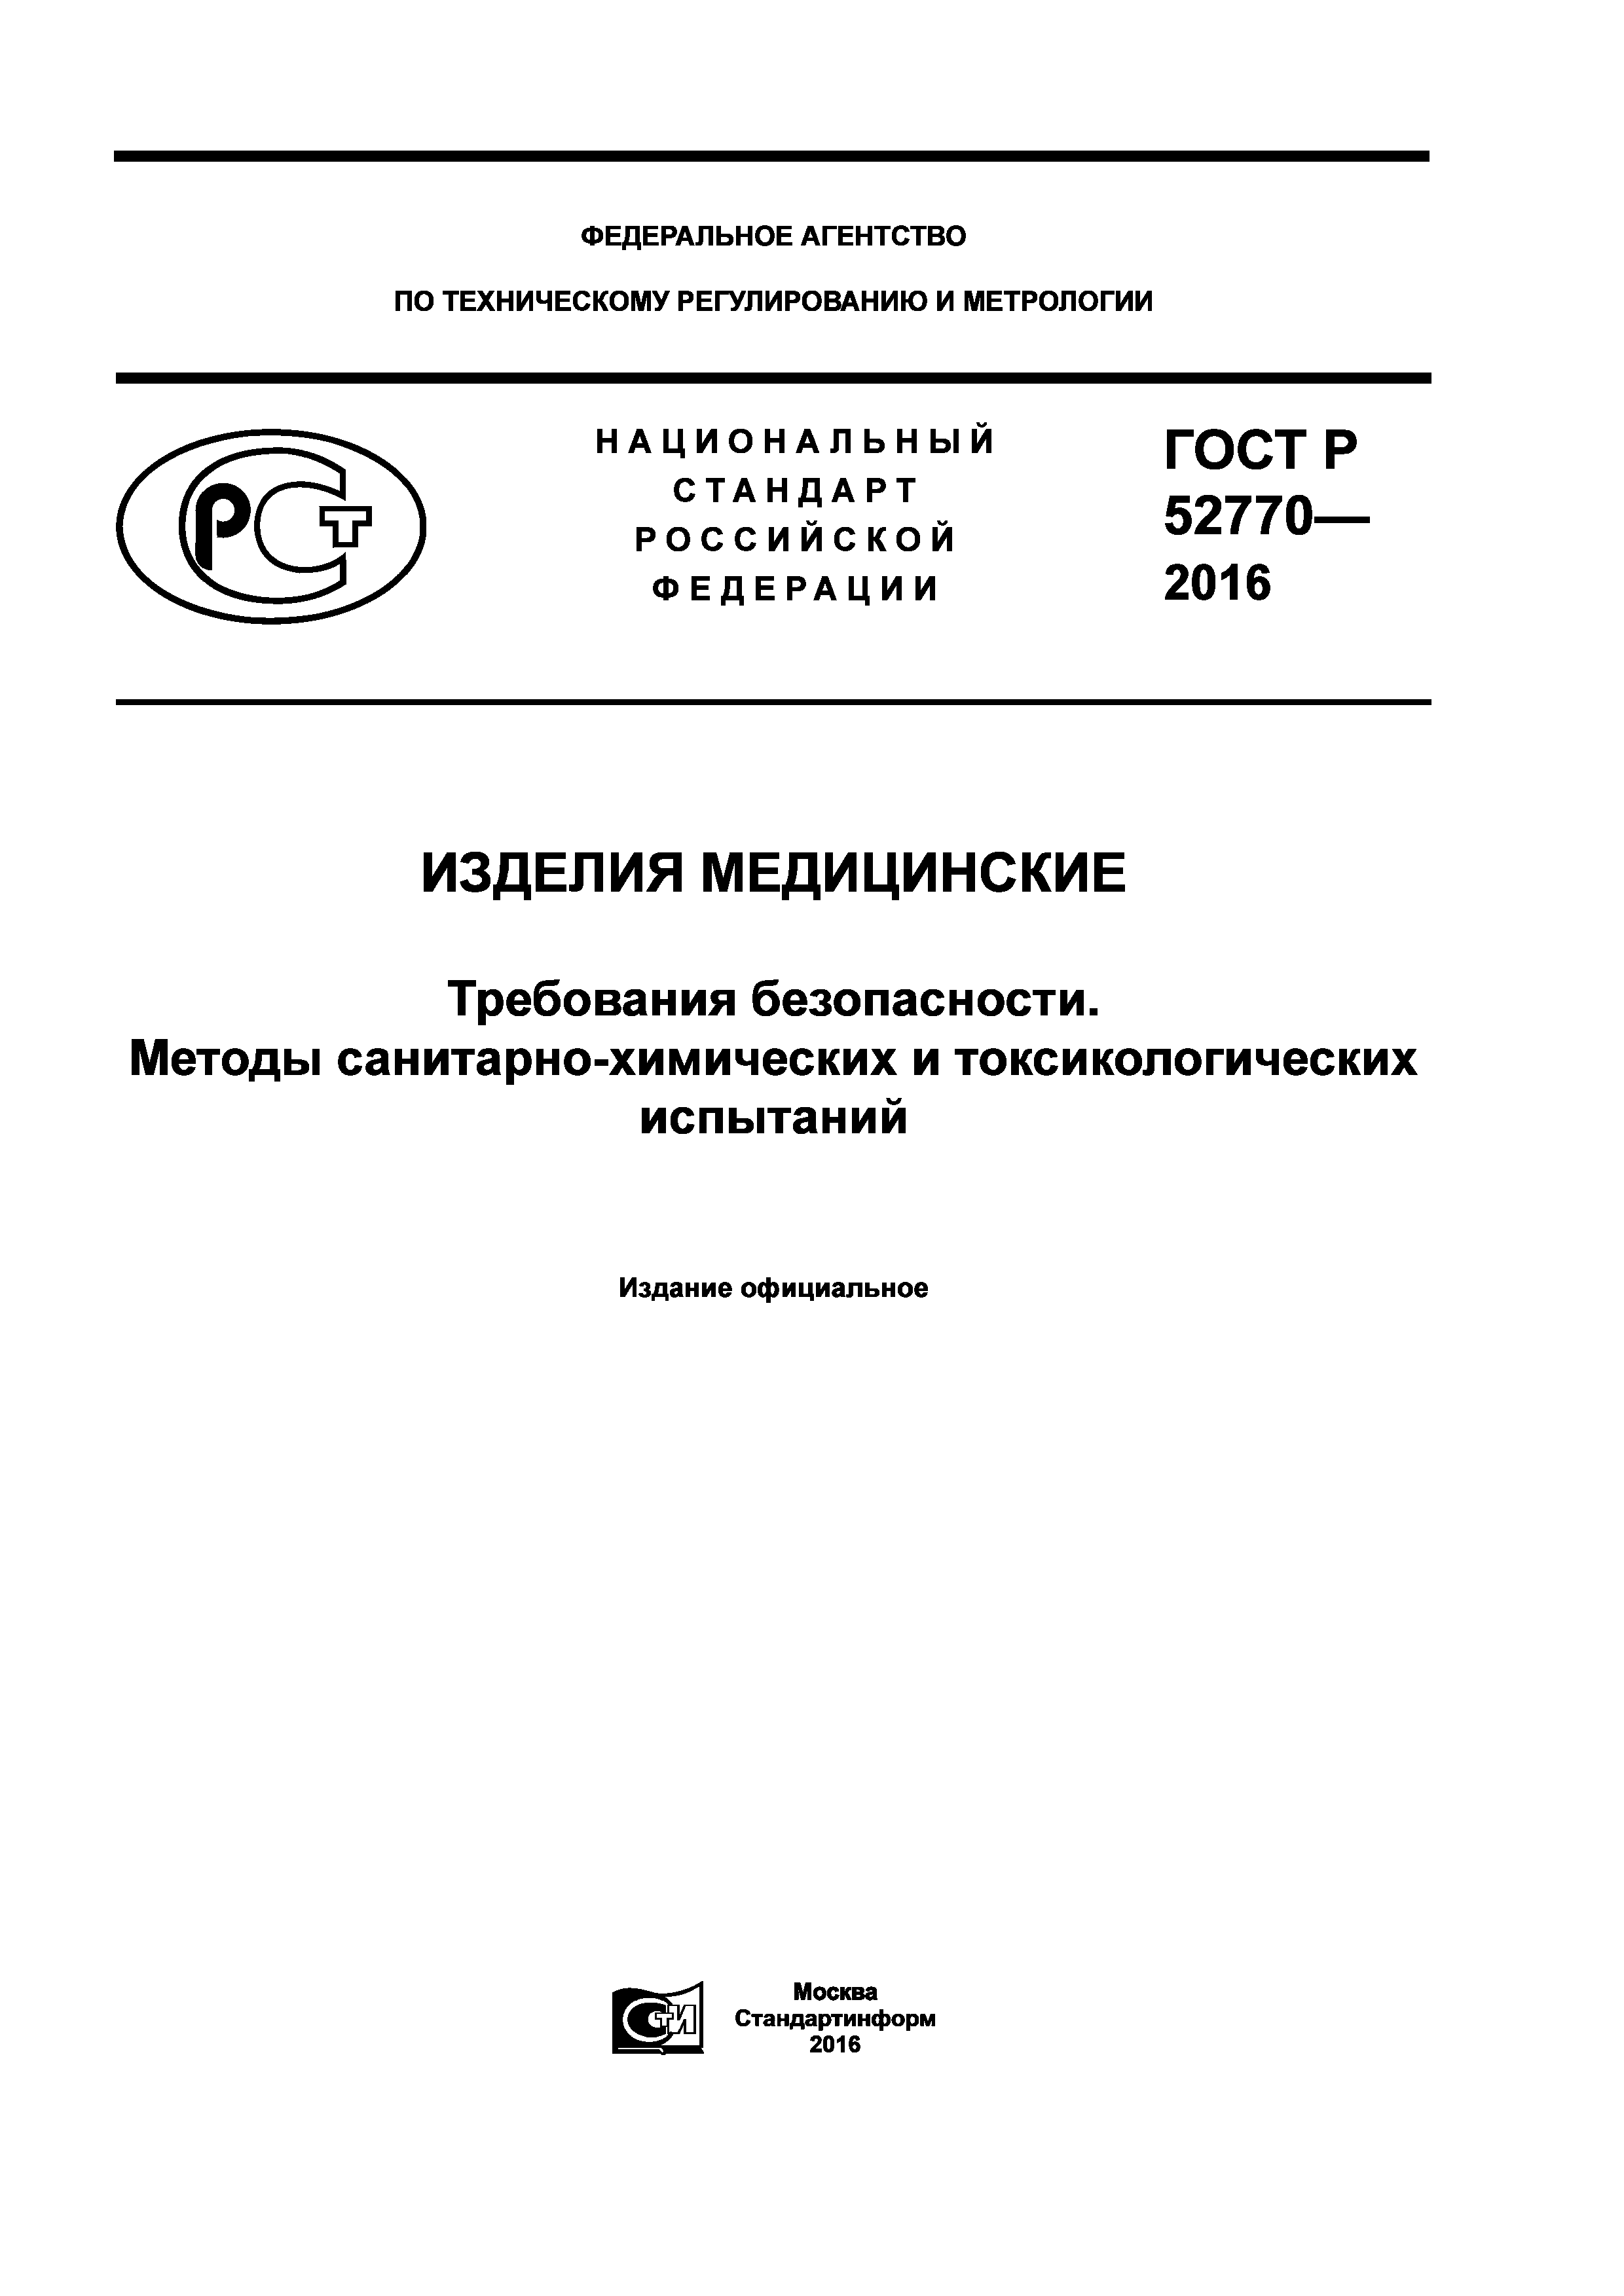 ГОСТ Р 52770-2016